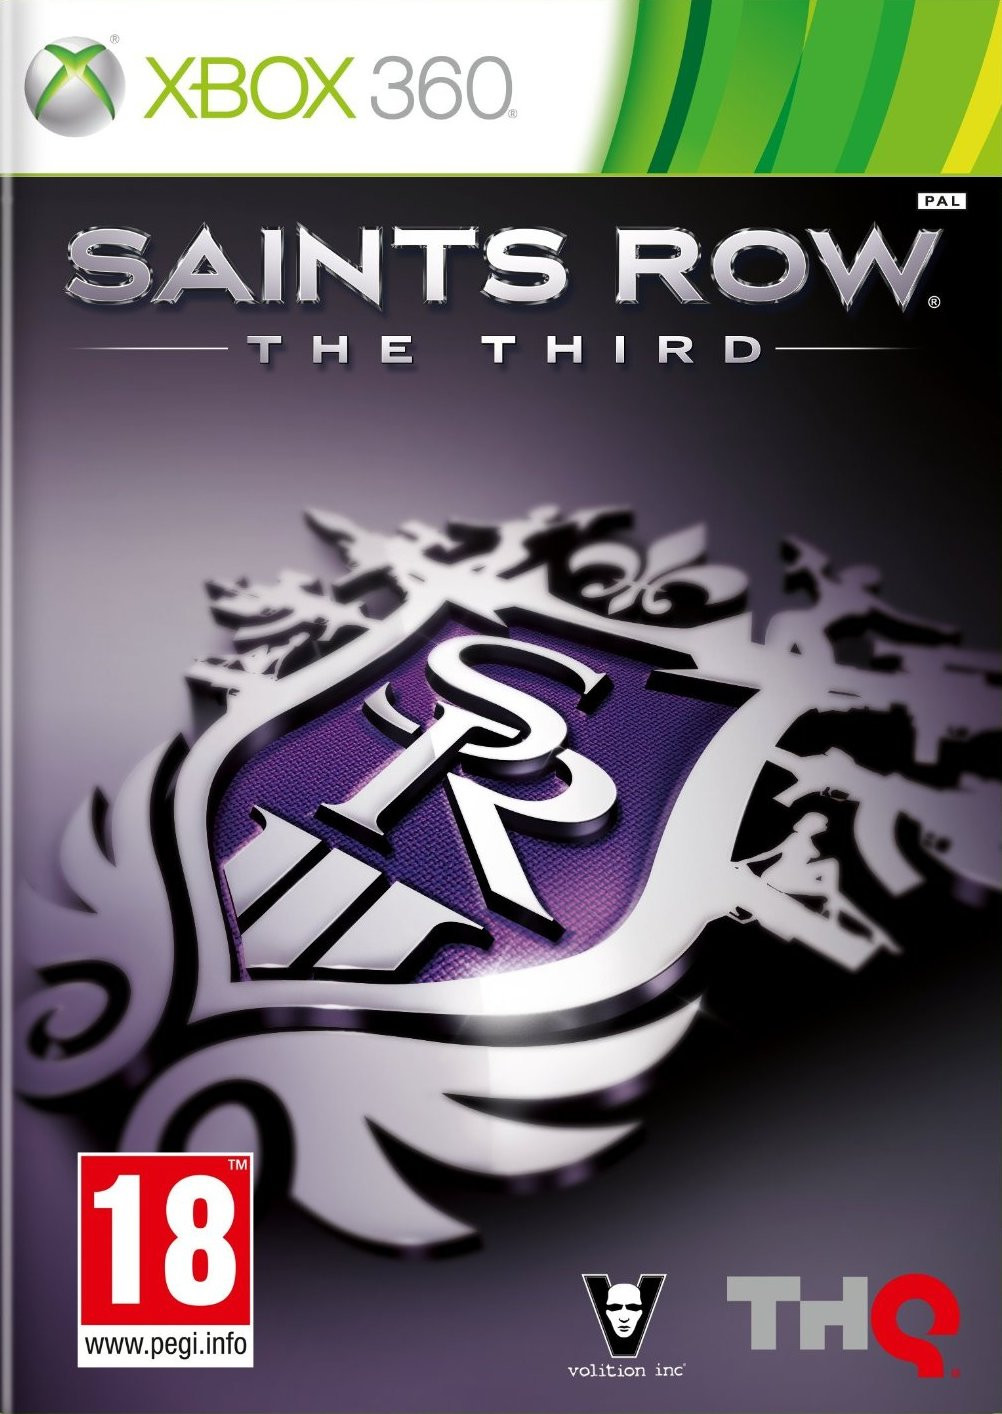 saints row 4 xbox one download free